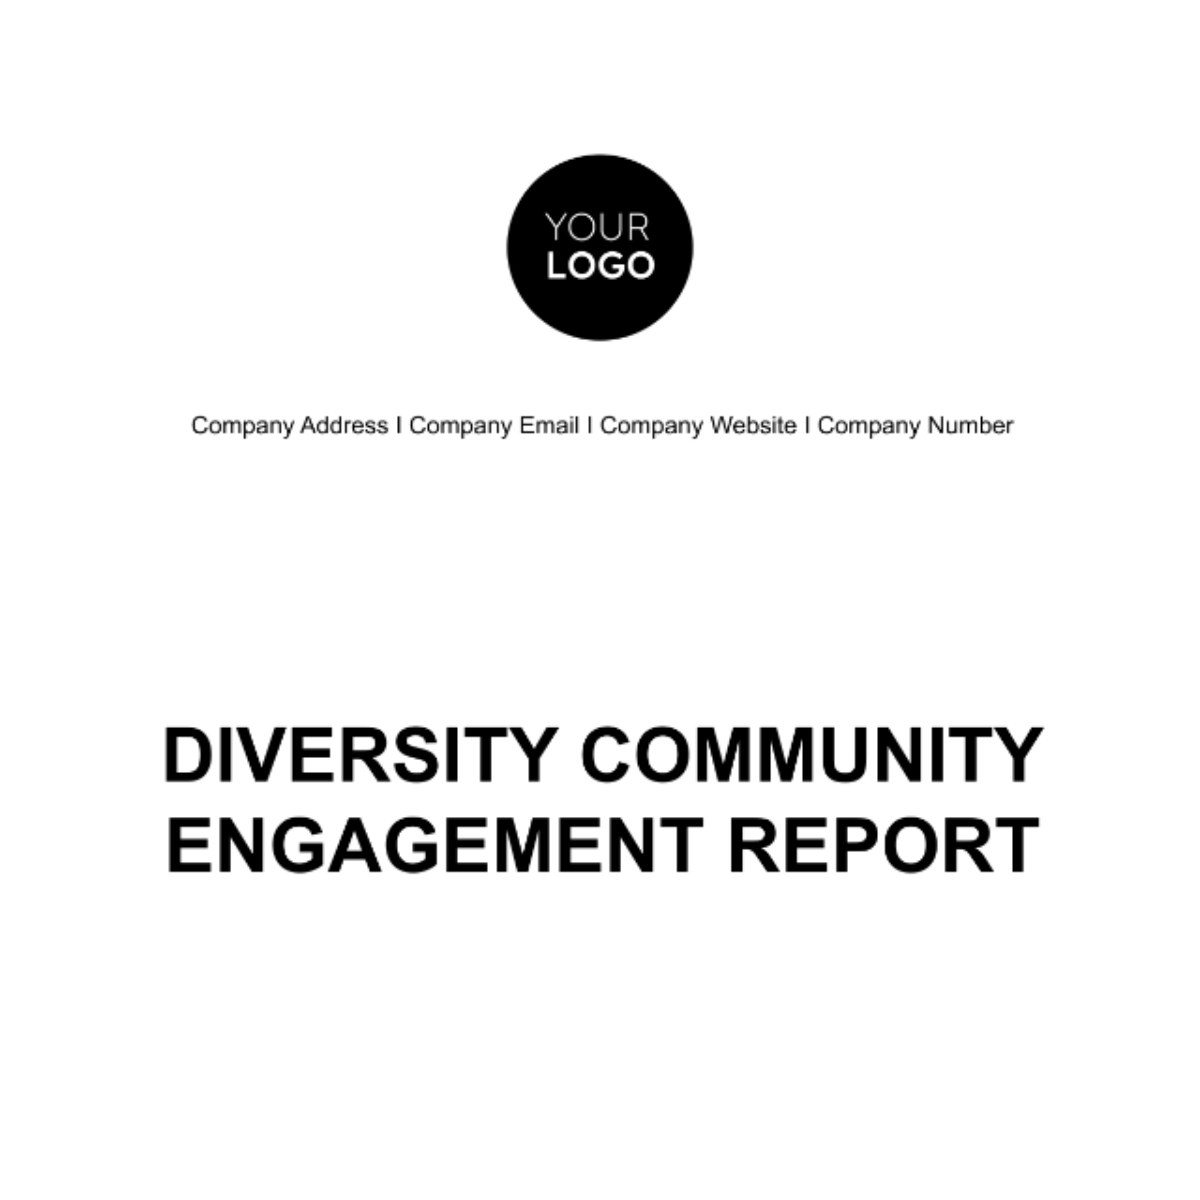 Diversity Community Engagement Report HR Template